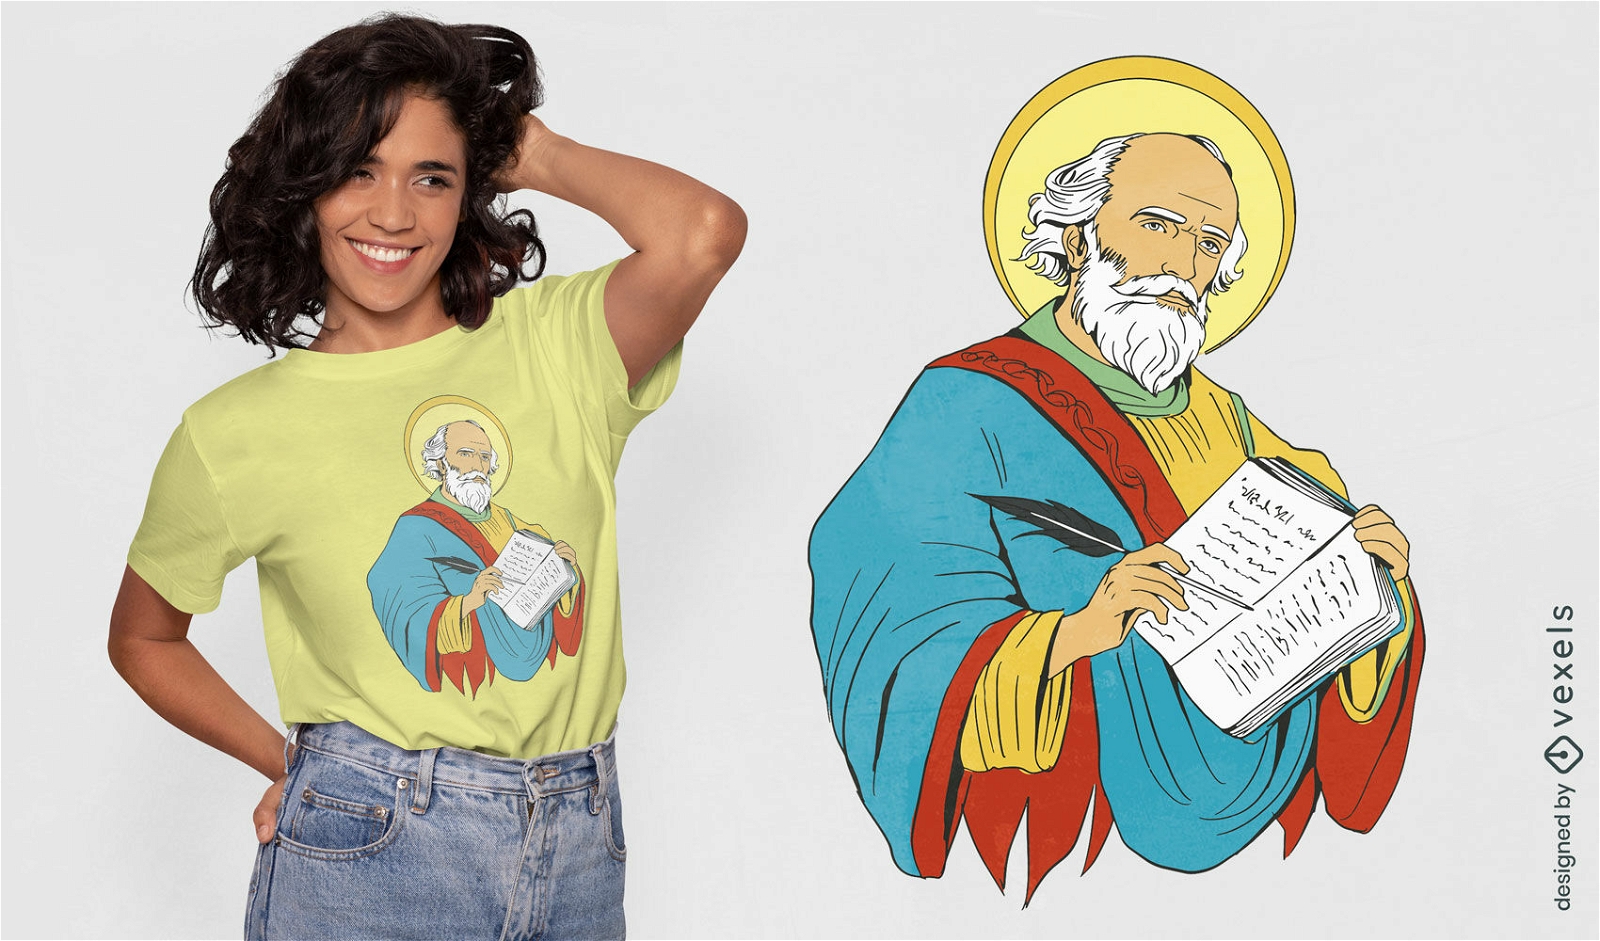 Dise?o de camiseta de figura religiosa santa.